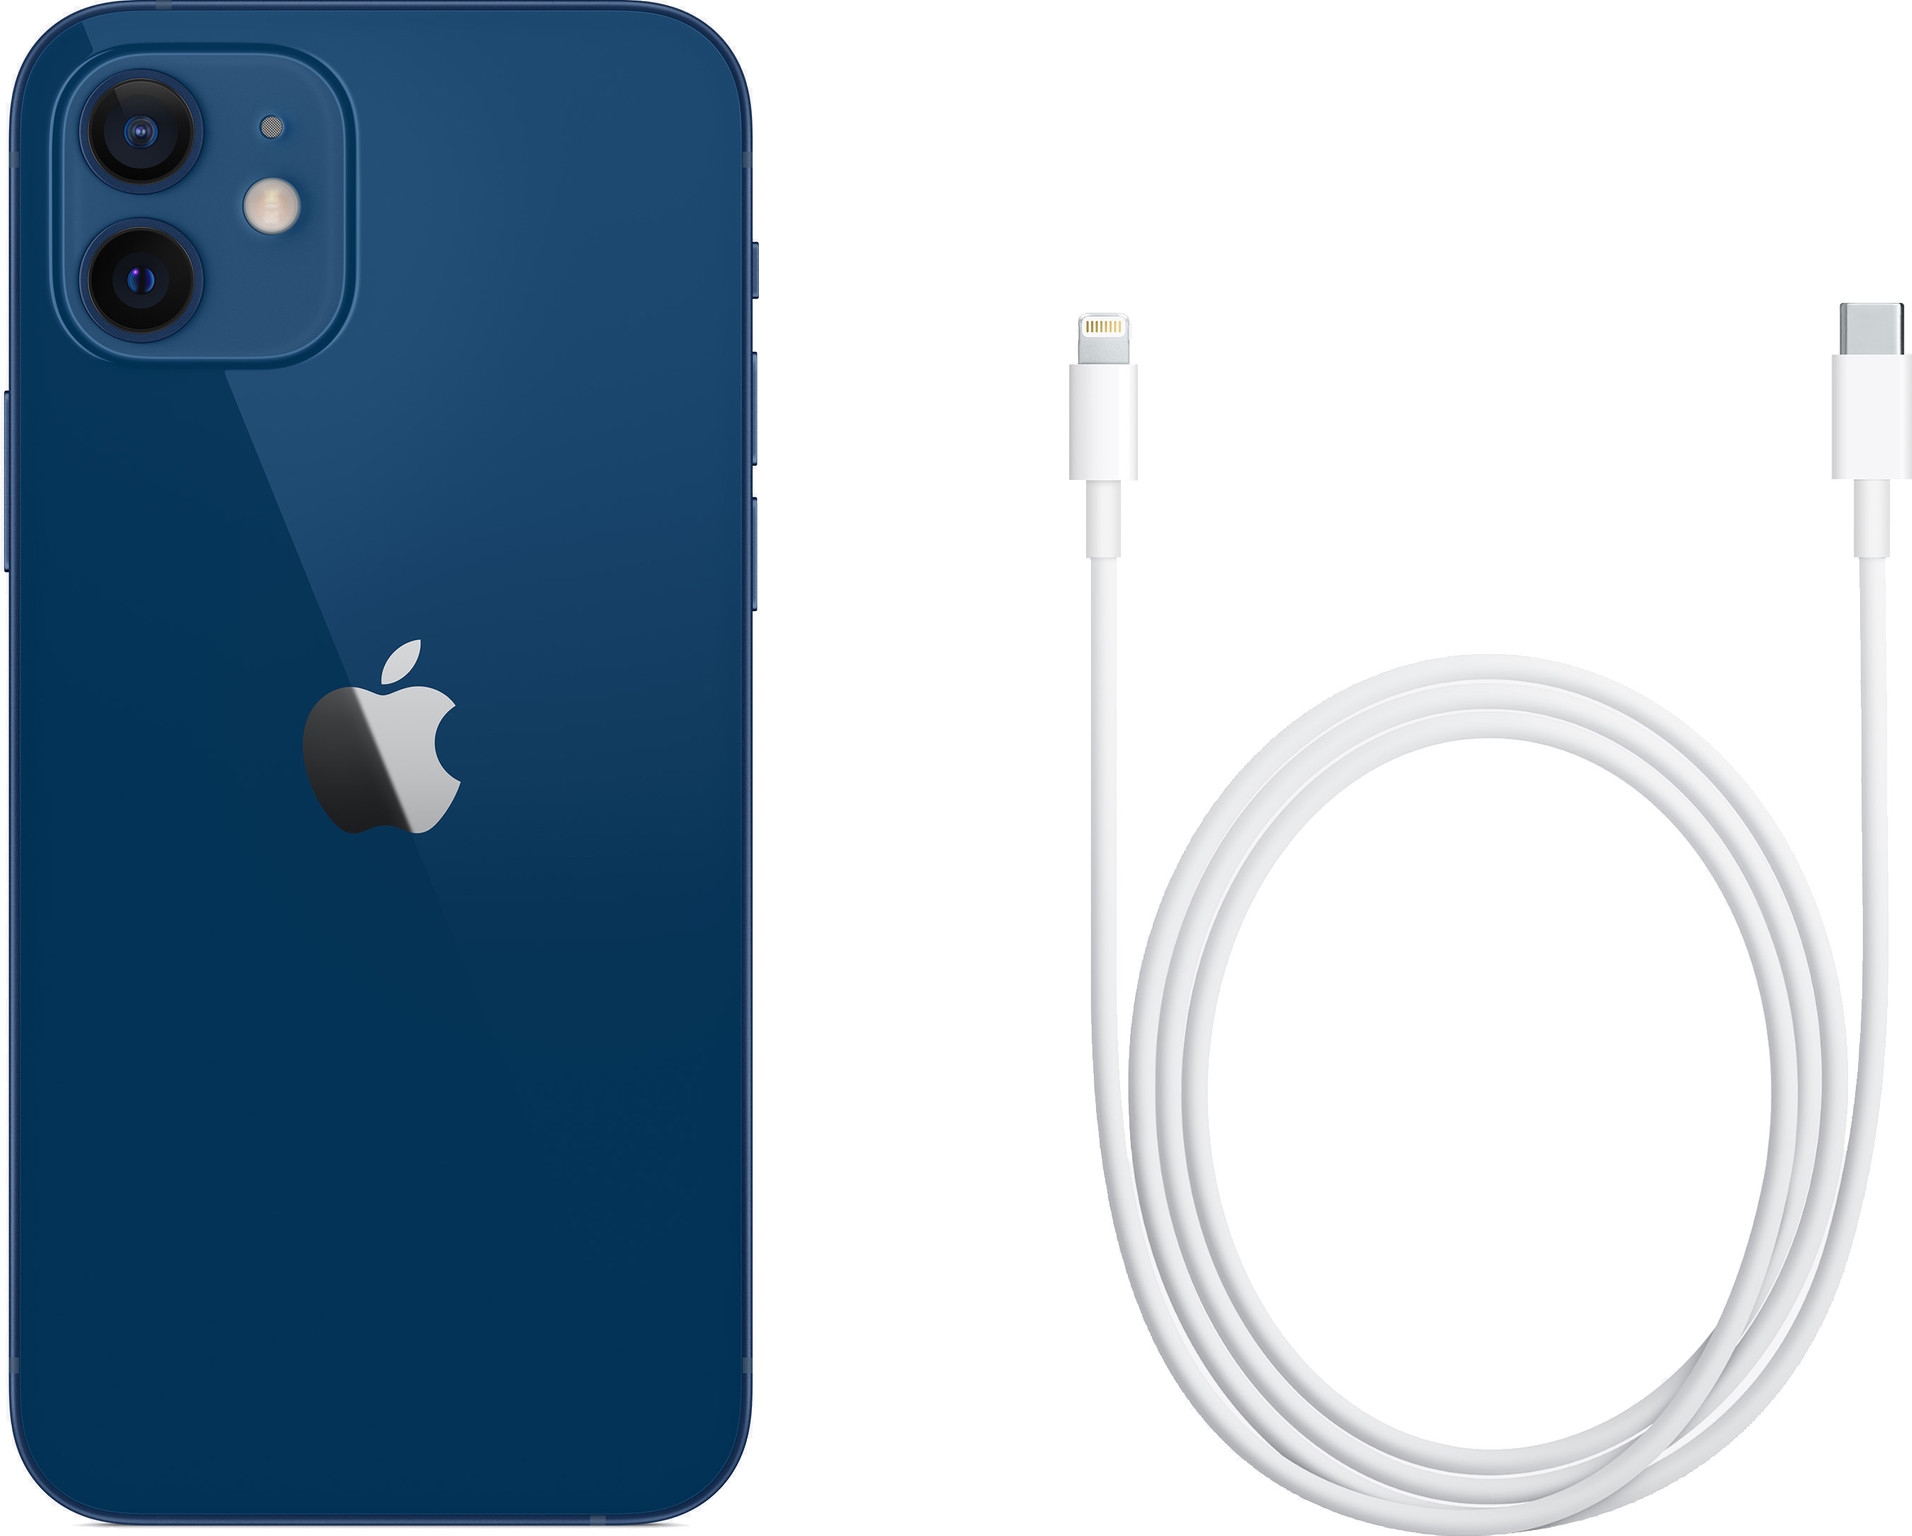 Forza Apple iPhone 12 mini 64GB Zo goed als nieuw